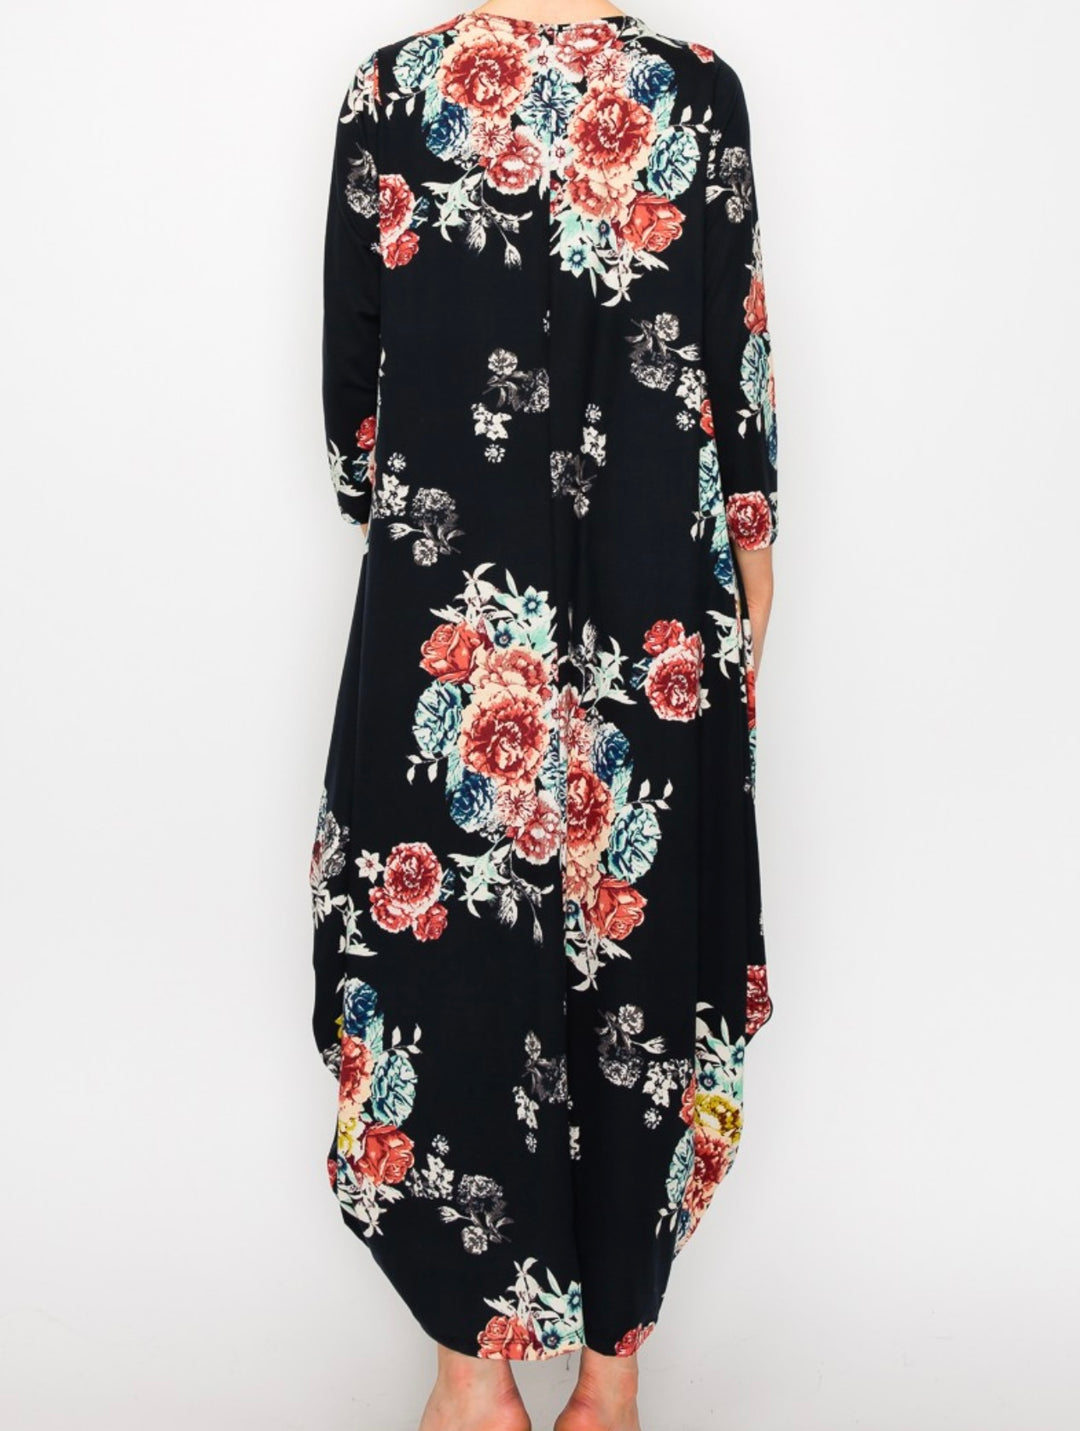 Poliana Black with Floral Print Pattern Bubble Dress Long Maxi Dress